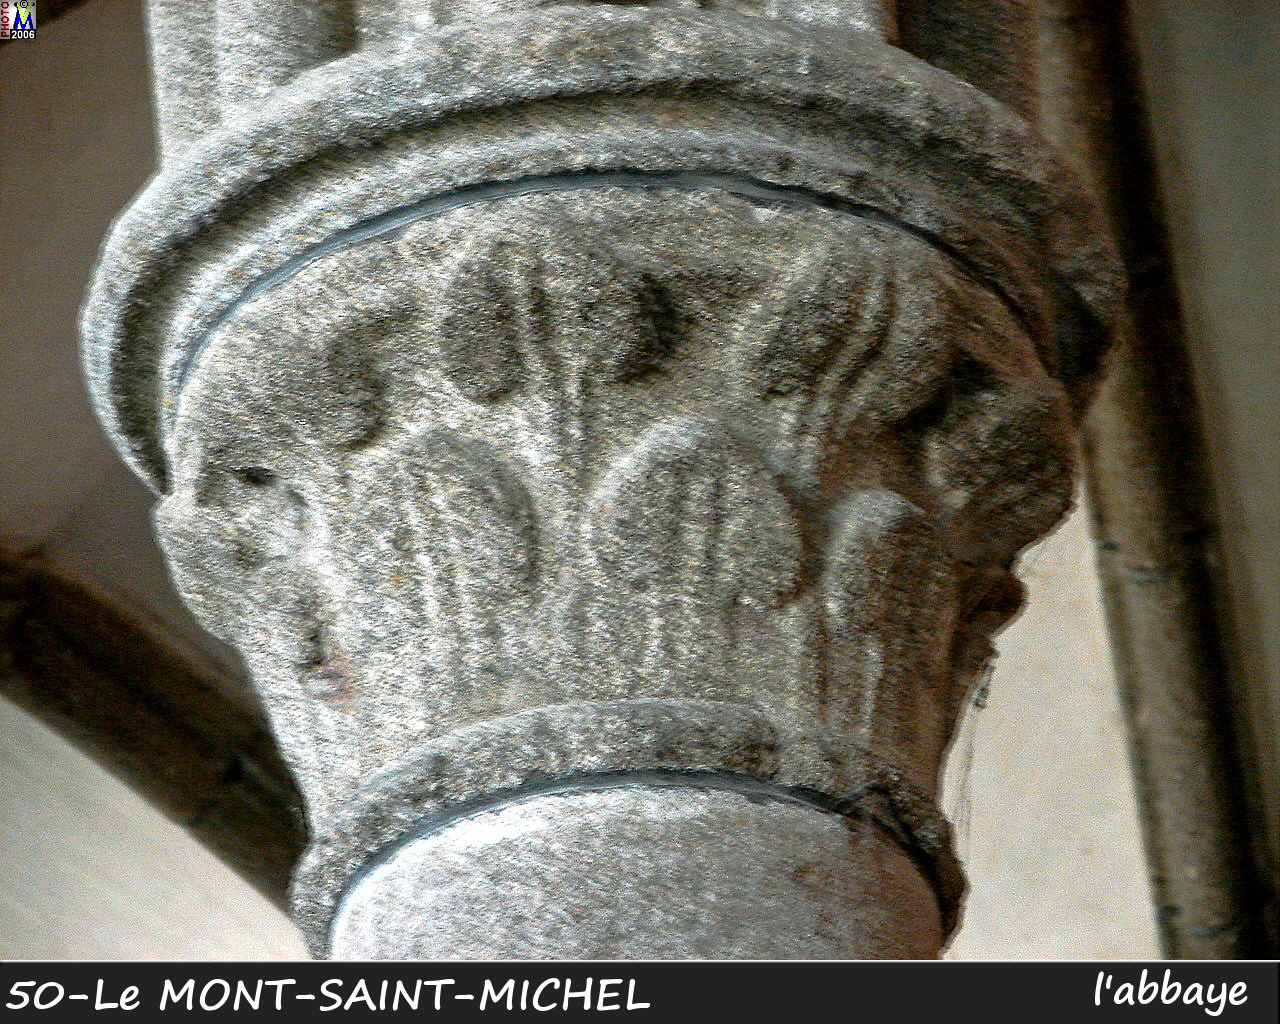 50LE-MONT-ST-MICHEL_abbaye_456.jpg